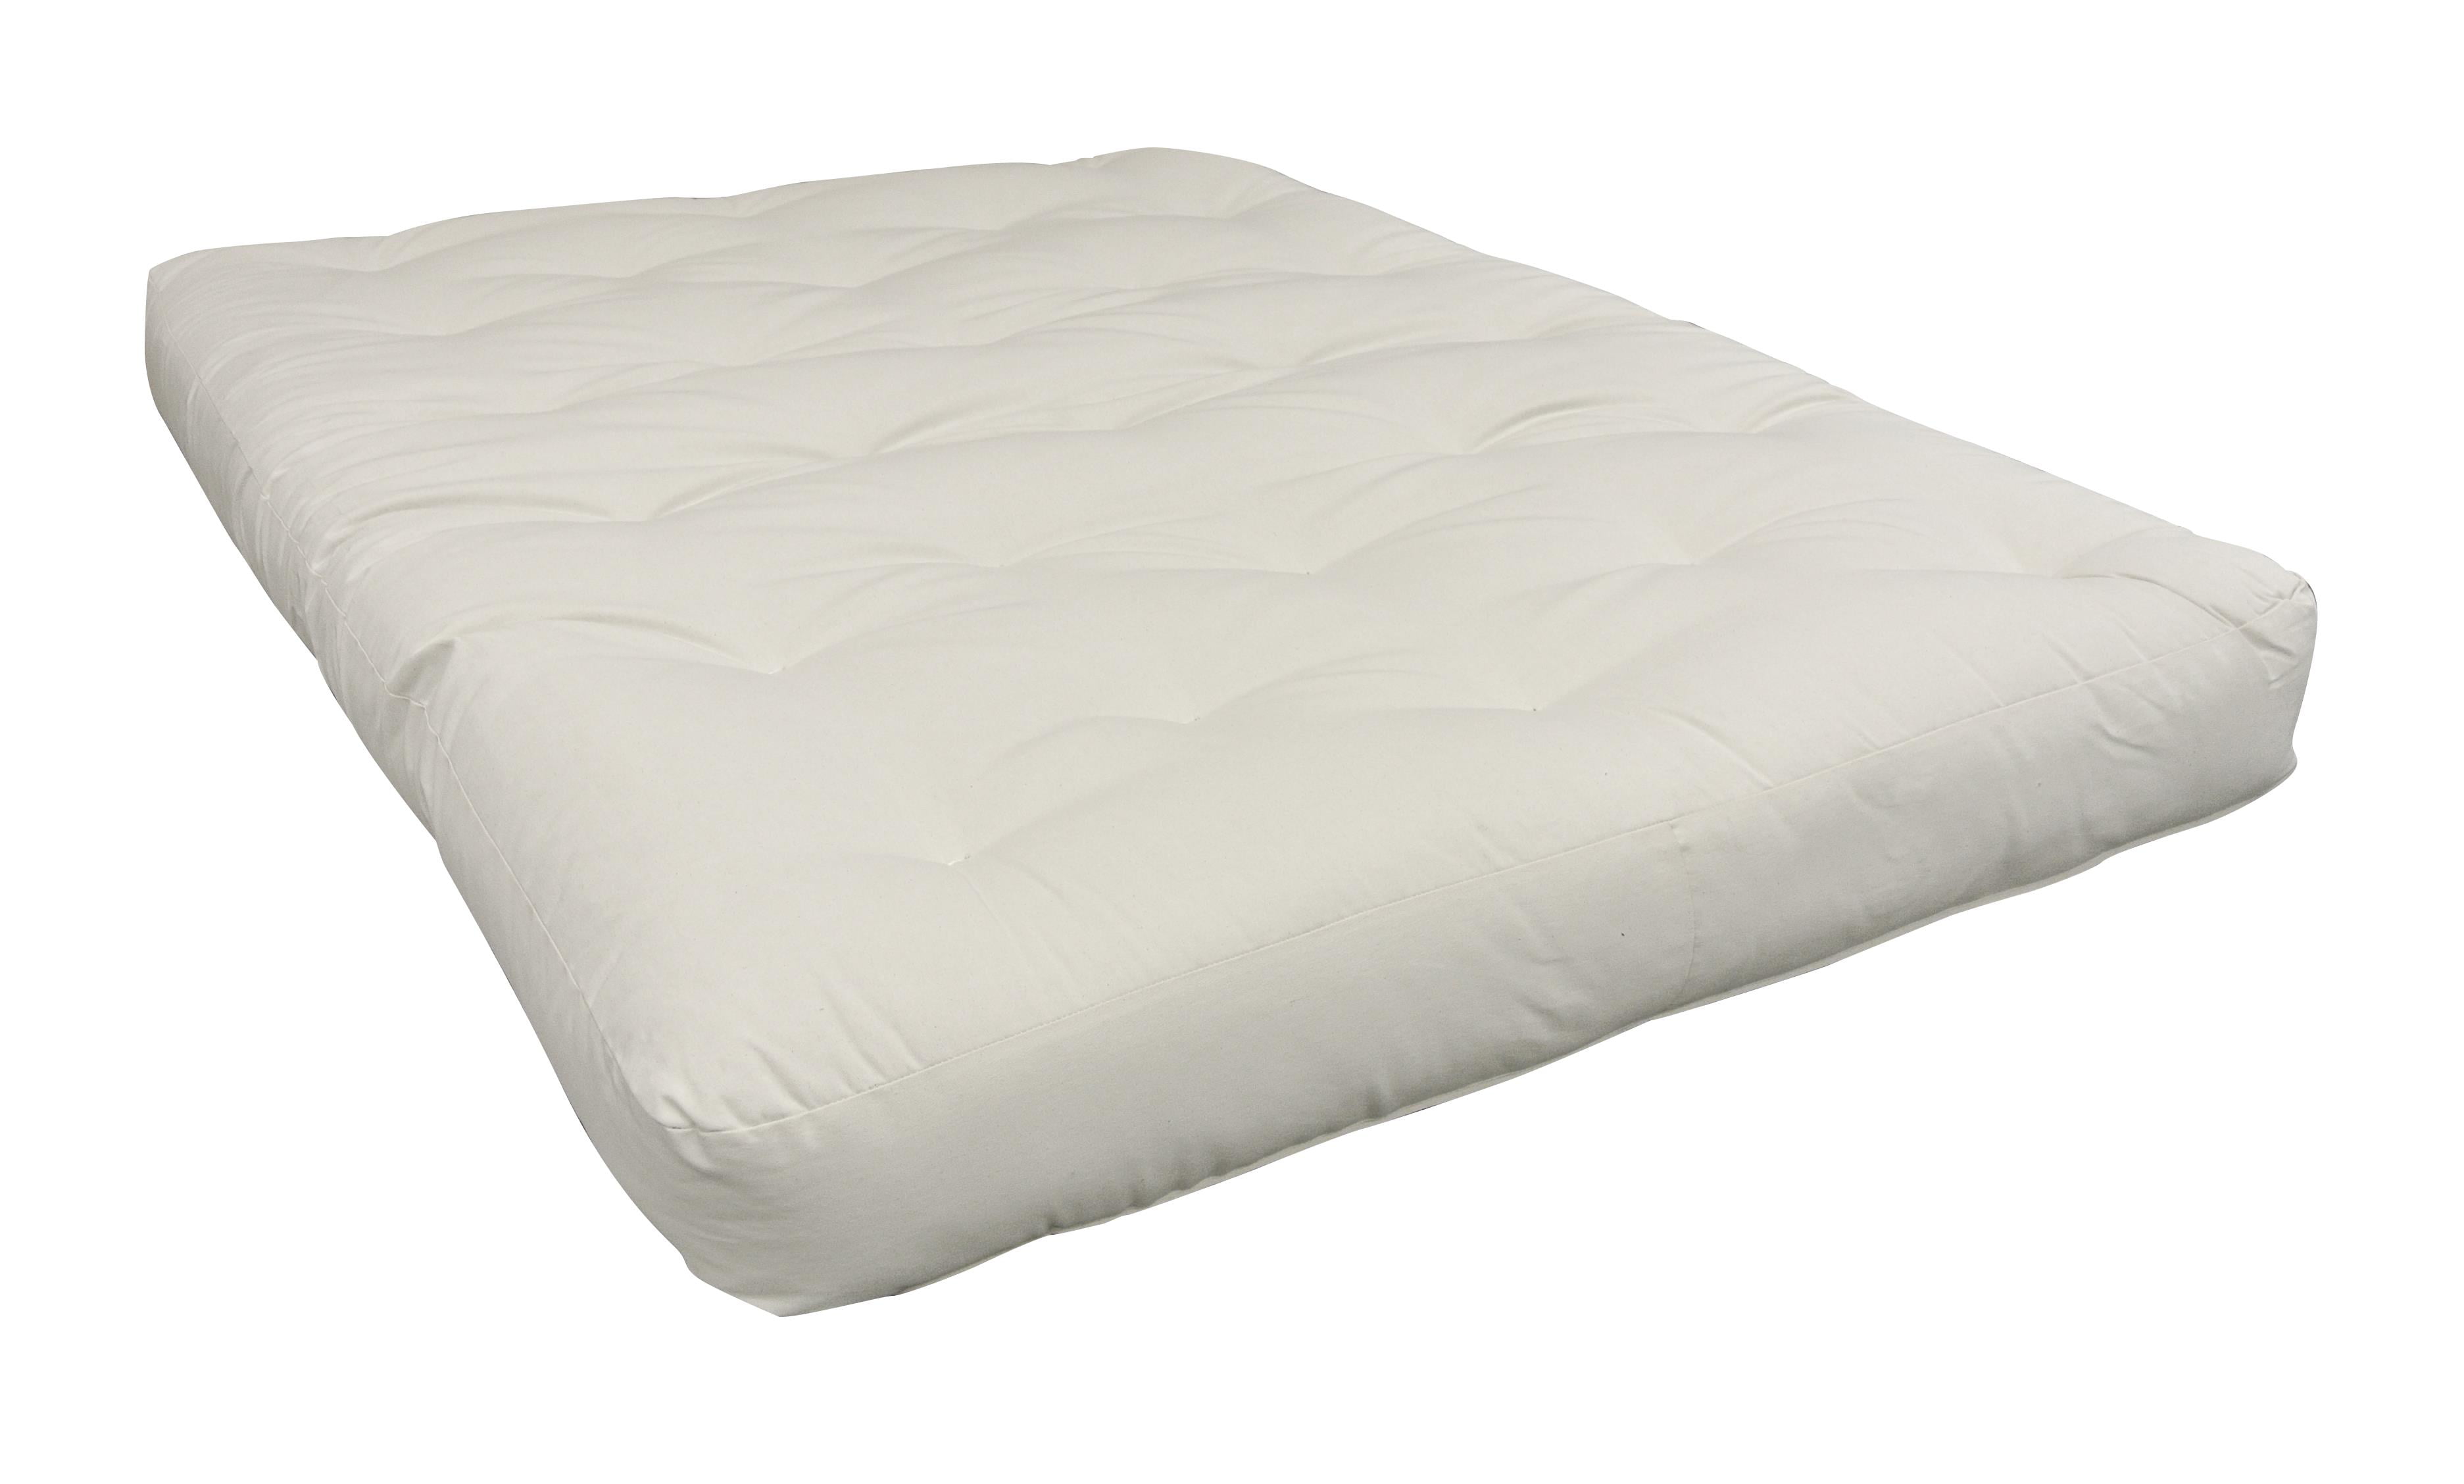 cotton batting mattress topper